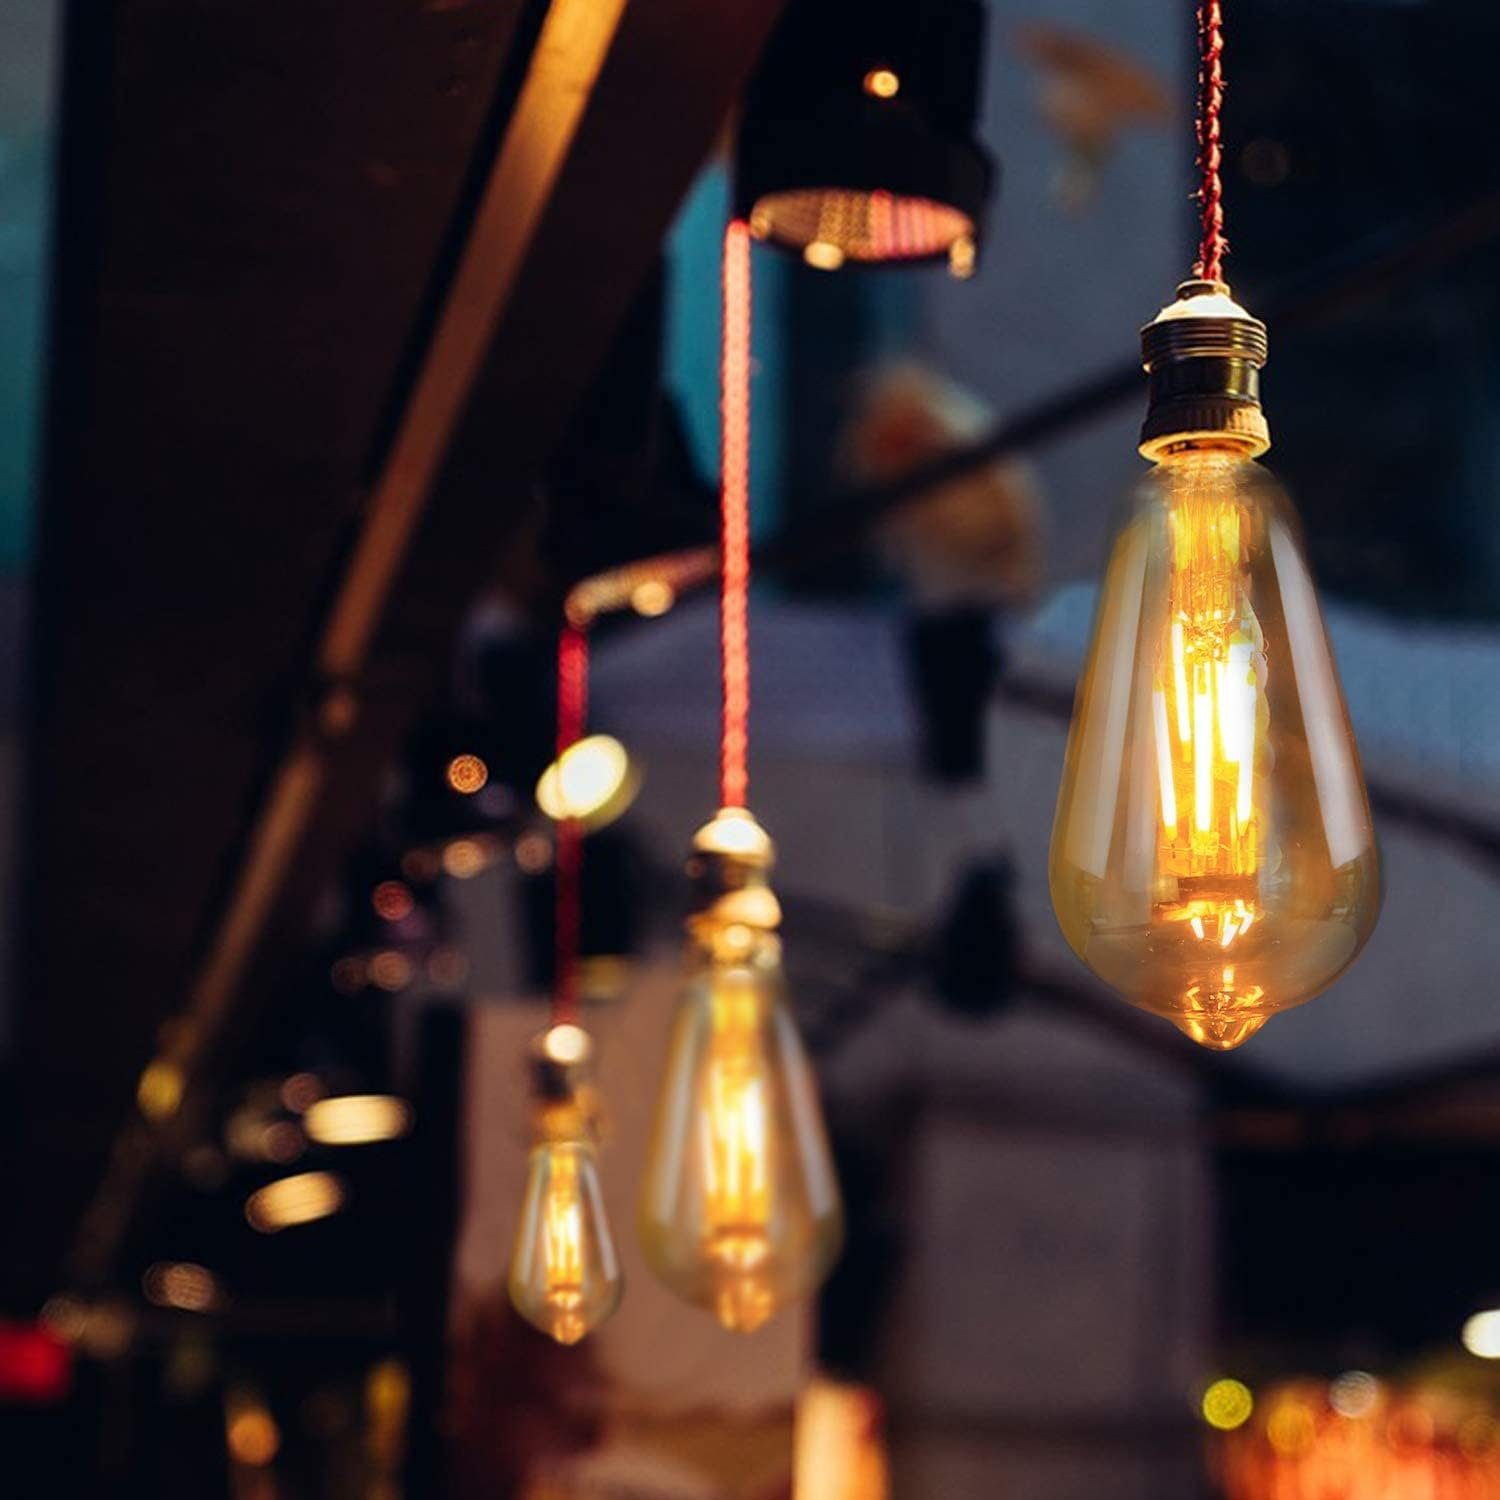 Retro 6 E27 Glühlampe Haus Glühbirne Edison im LED Filament, Antike E27, 4W Beleuchtung St., LED-Leuchtmittel Café Restaurant Warmweiß, für Nostalgie LED Nettlife 6er & Braun Retro